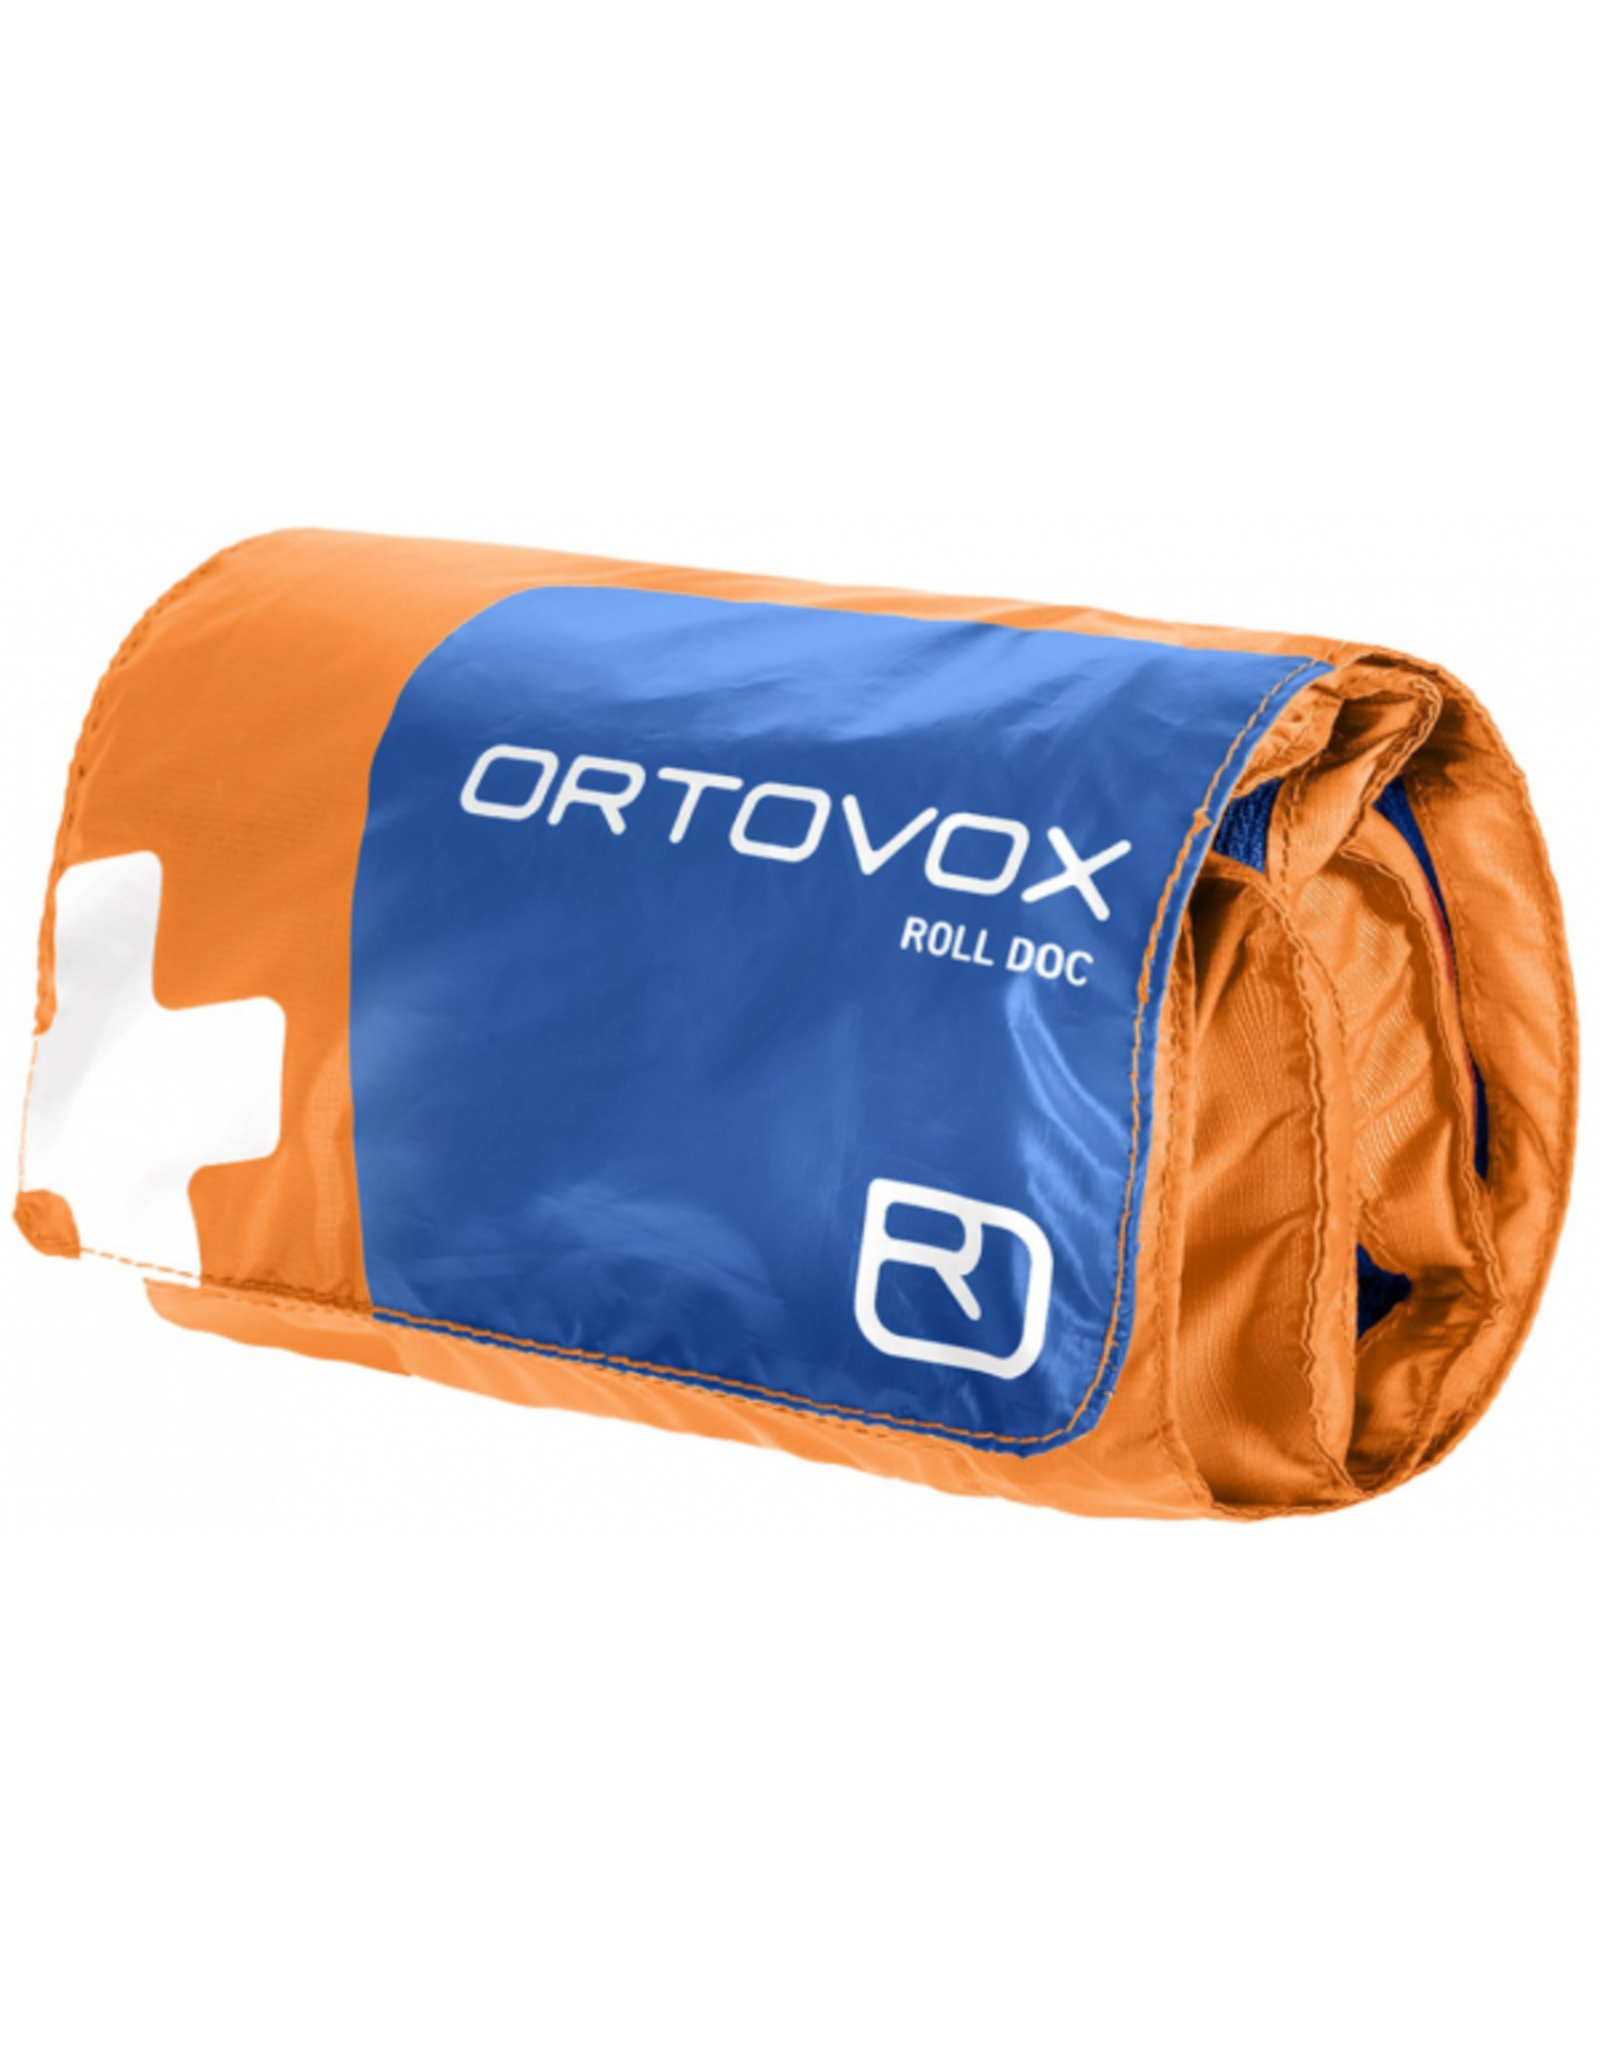 Ortovox Ortovox FIRST AID ROLL DOC